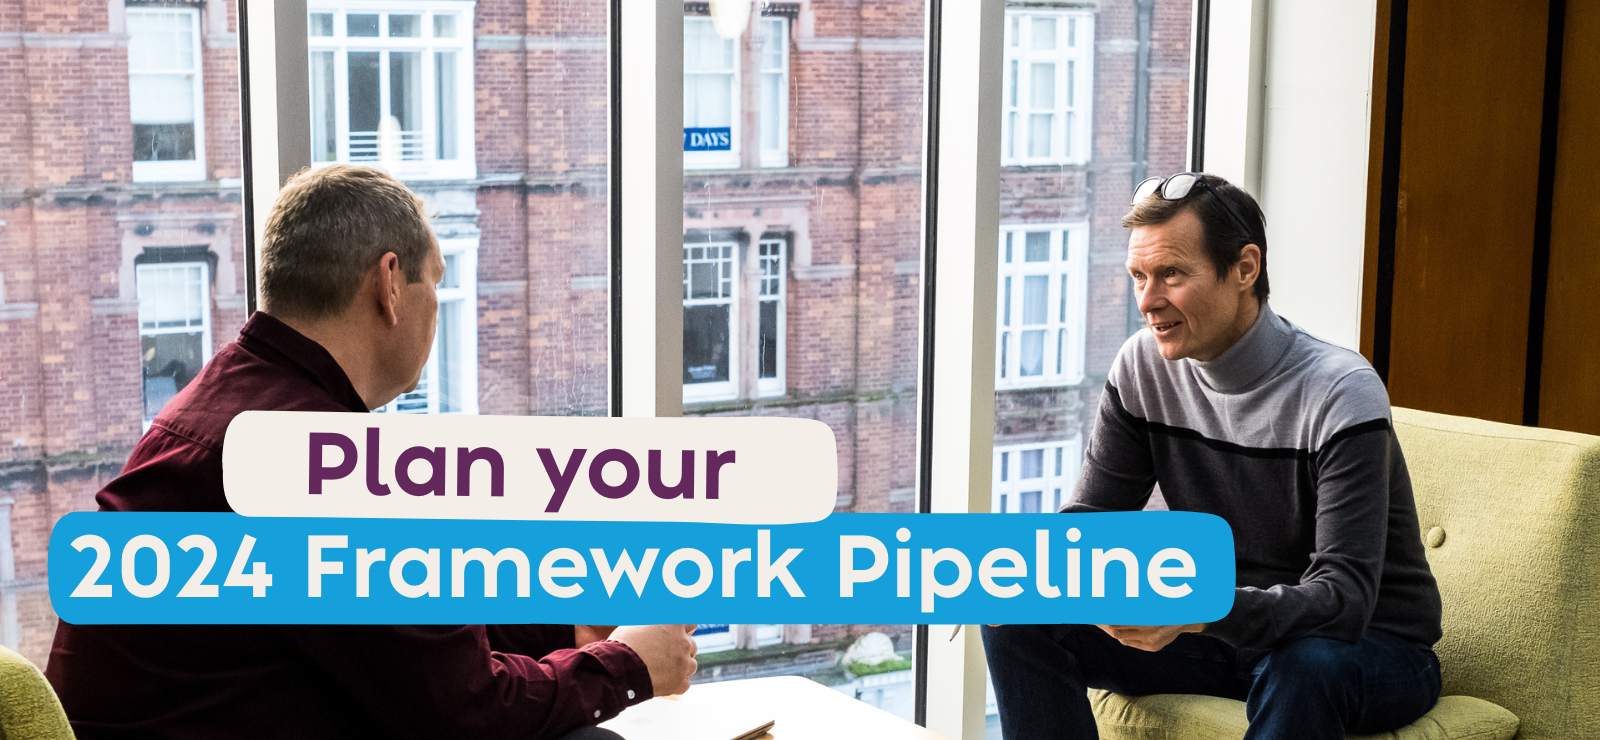 Plan your 2024 framework pipeline LARGE aspect ratio 1600 740